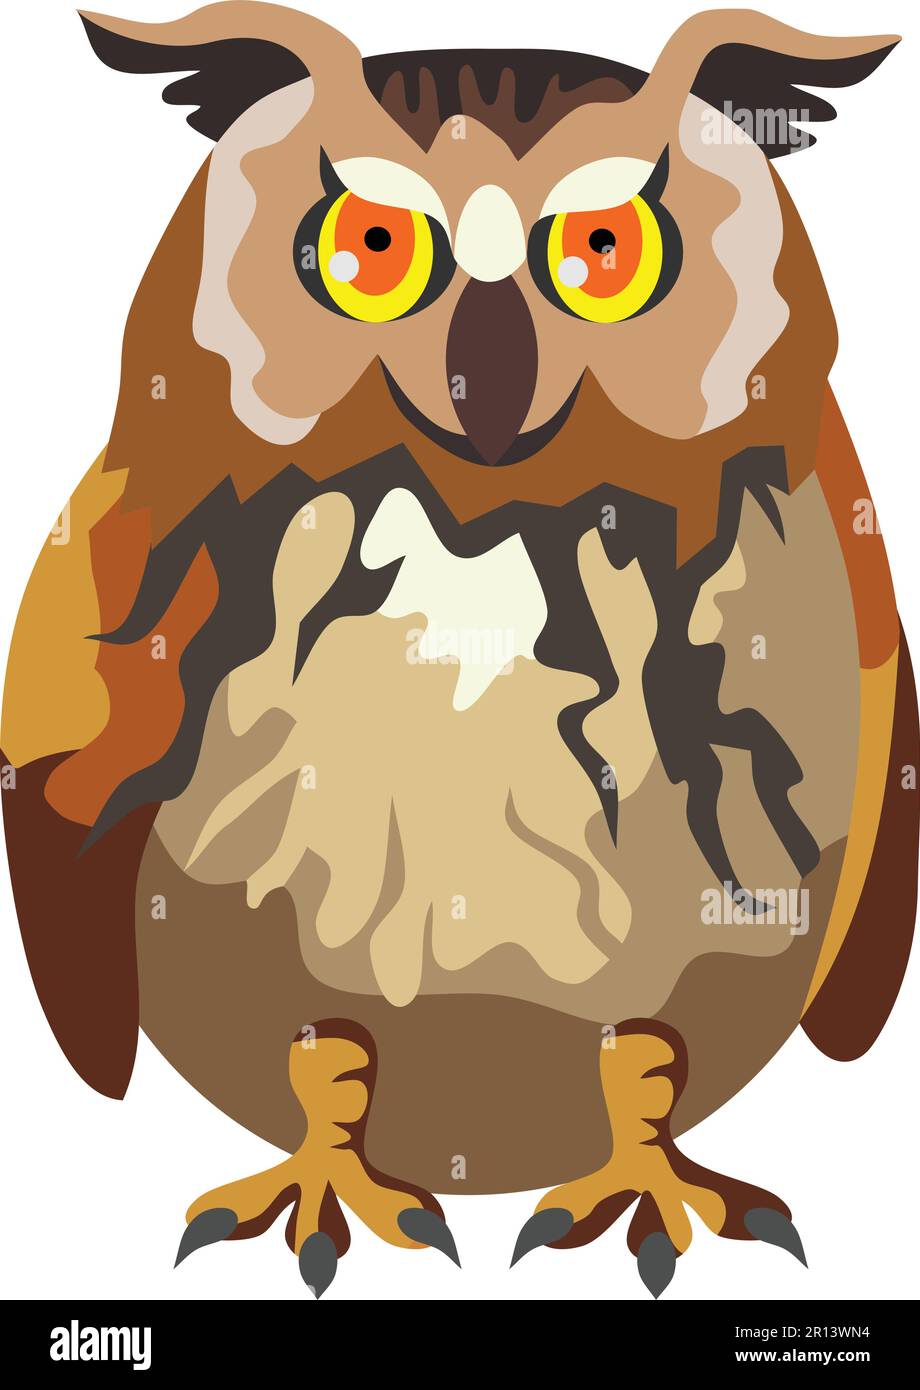 Owl anatomy Stock Vector Images - Alamy